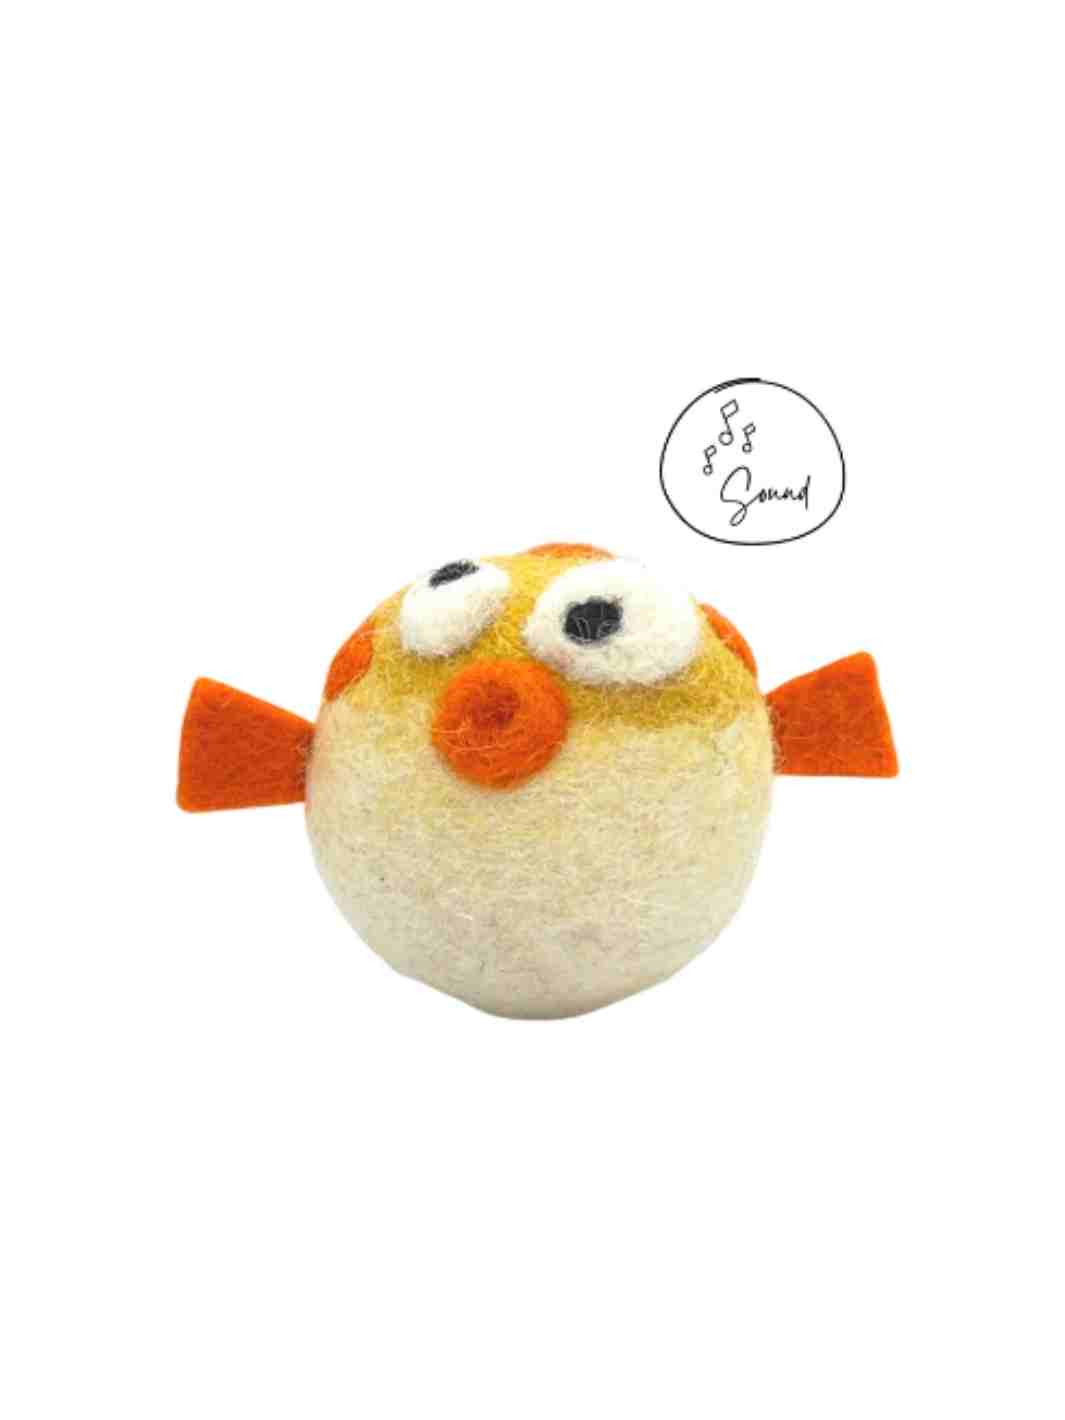 Felt Toys | Eco Cat Toys - Felt Pufferfish | Handmade Toys | Toy Sea Animals | Blowfish | Eco Dog & Cat